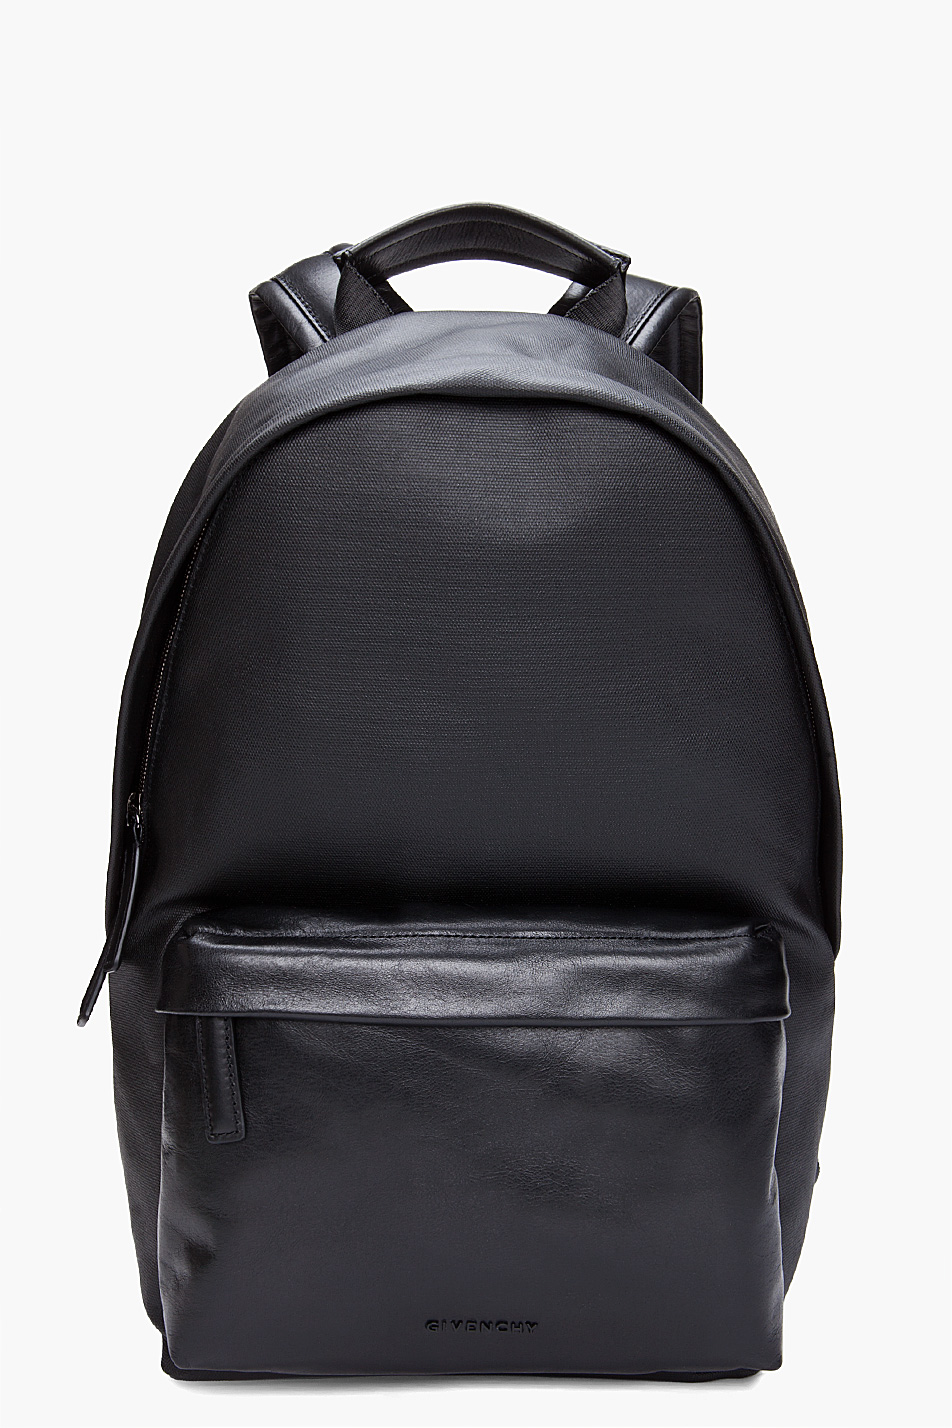 Lyst - Givenchy Black Obsedia Backpack in Black for Men